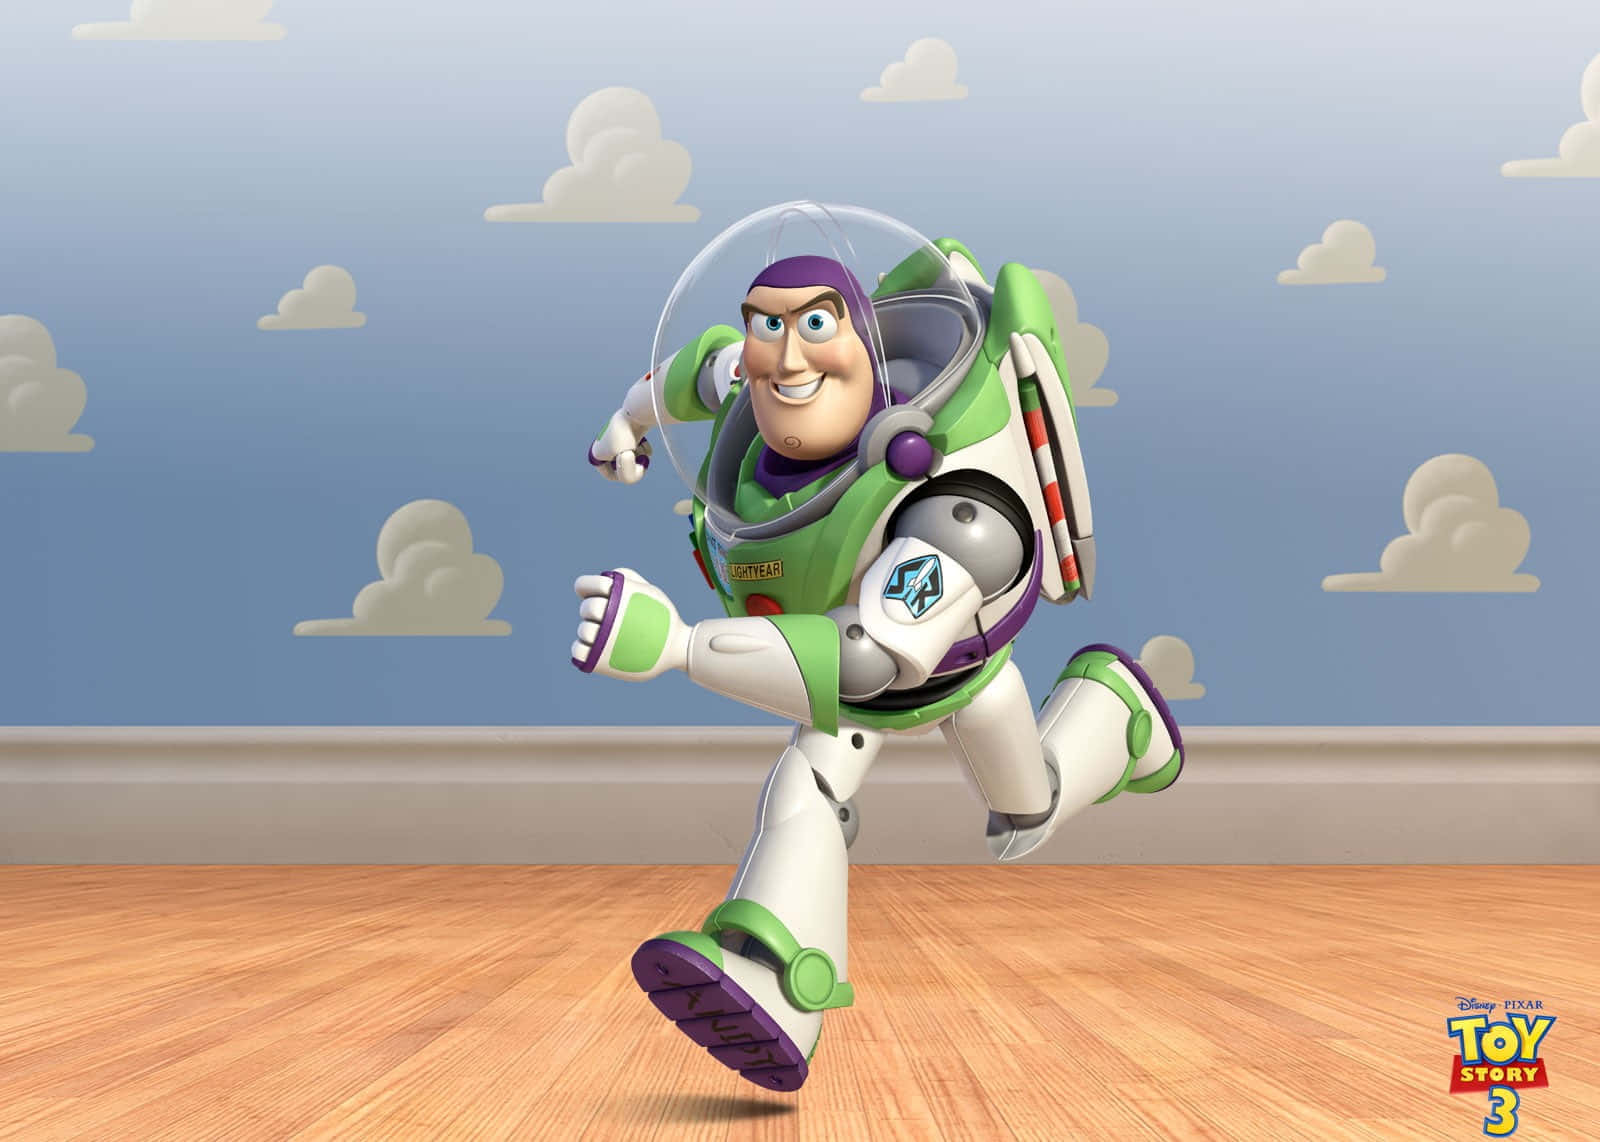 Buzz Lightyear Running On A Wooden Floor